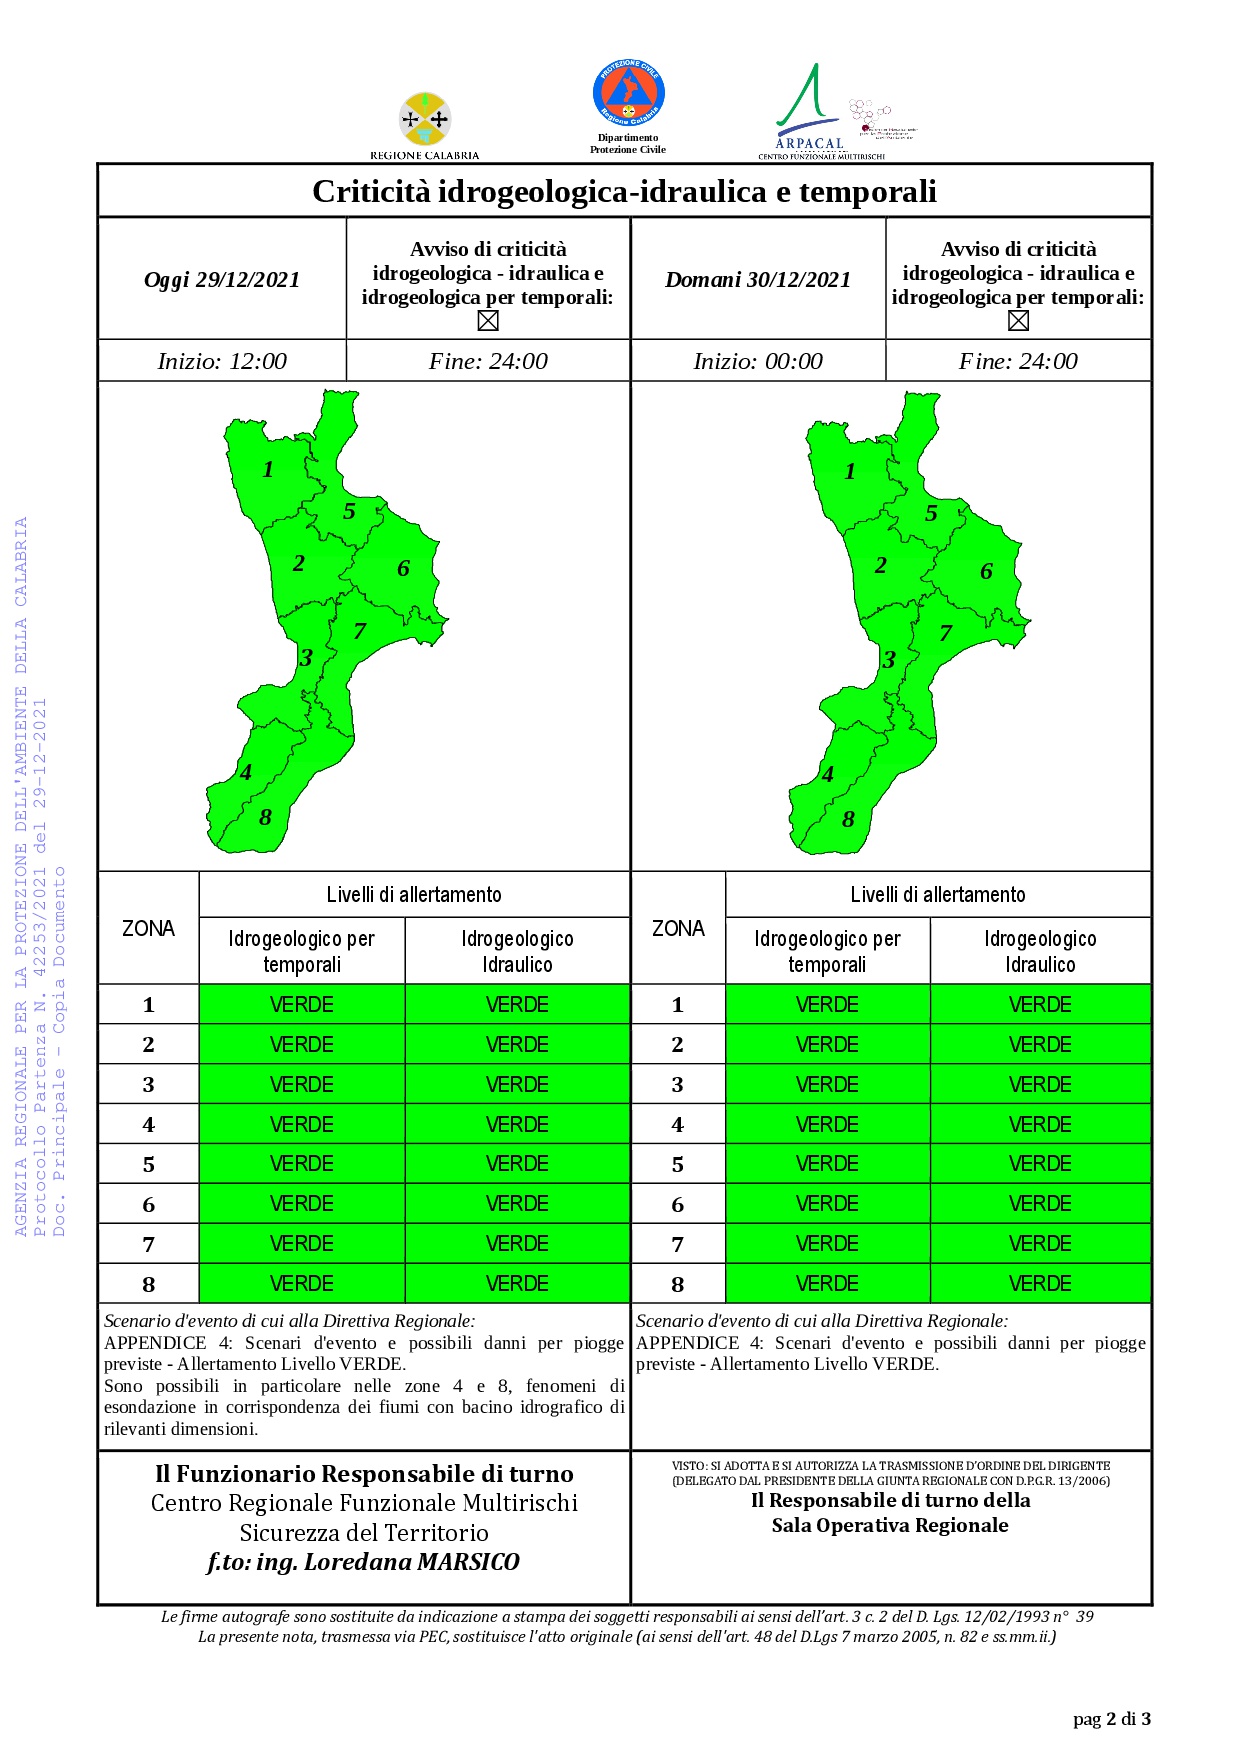 Criticità idrogeologica-idraulica e temporali in Calabria 29-12-2021